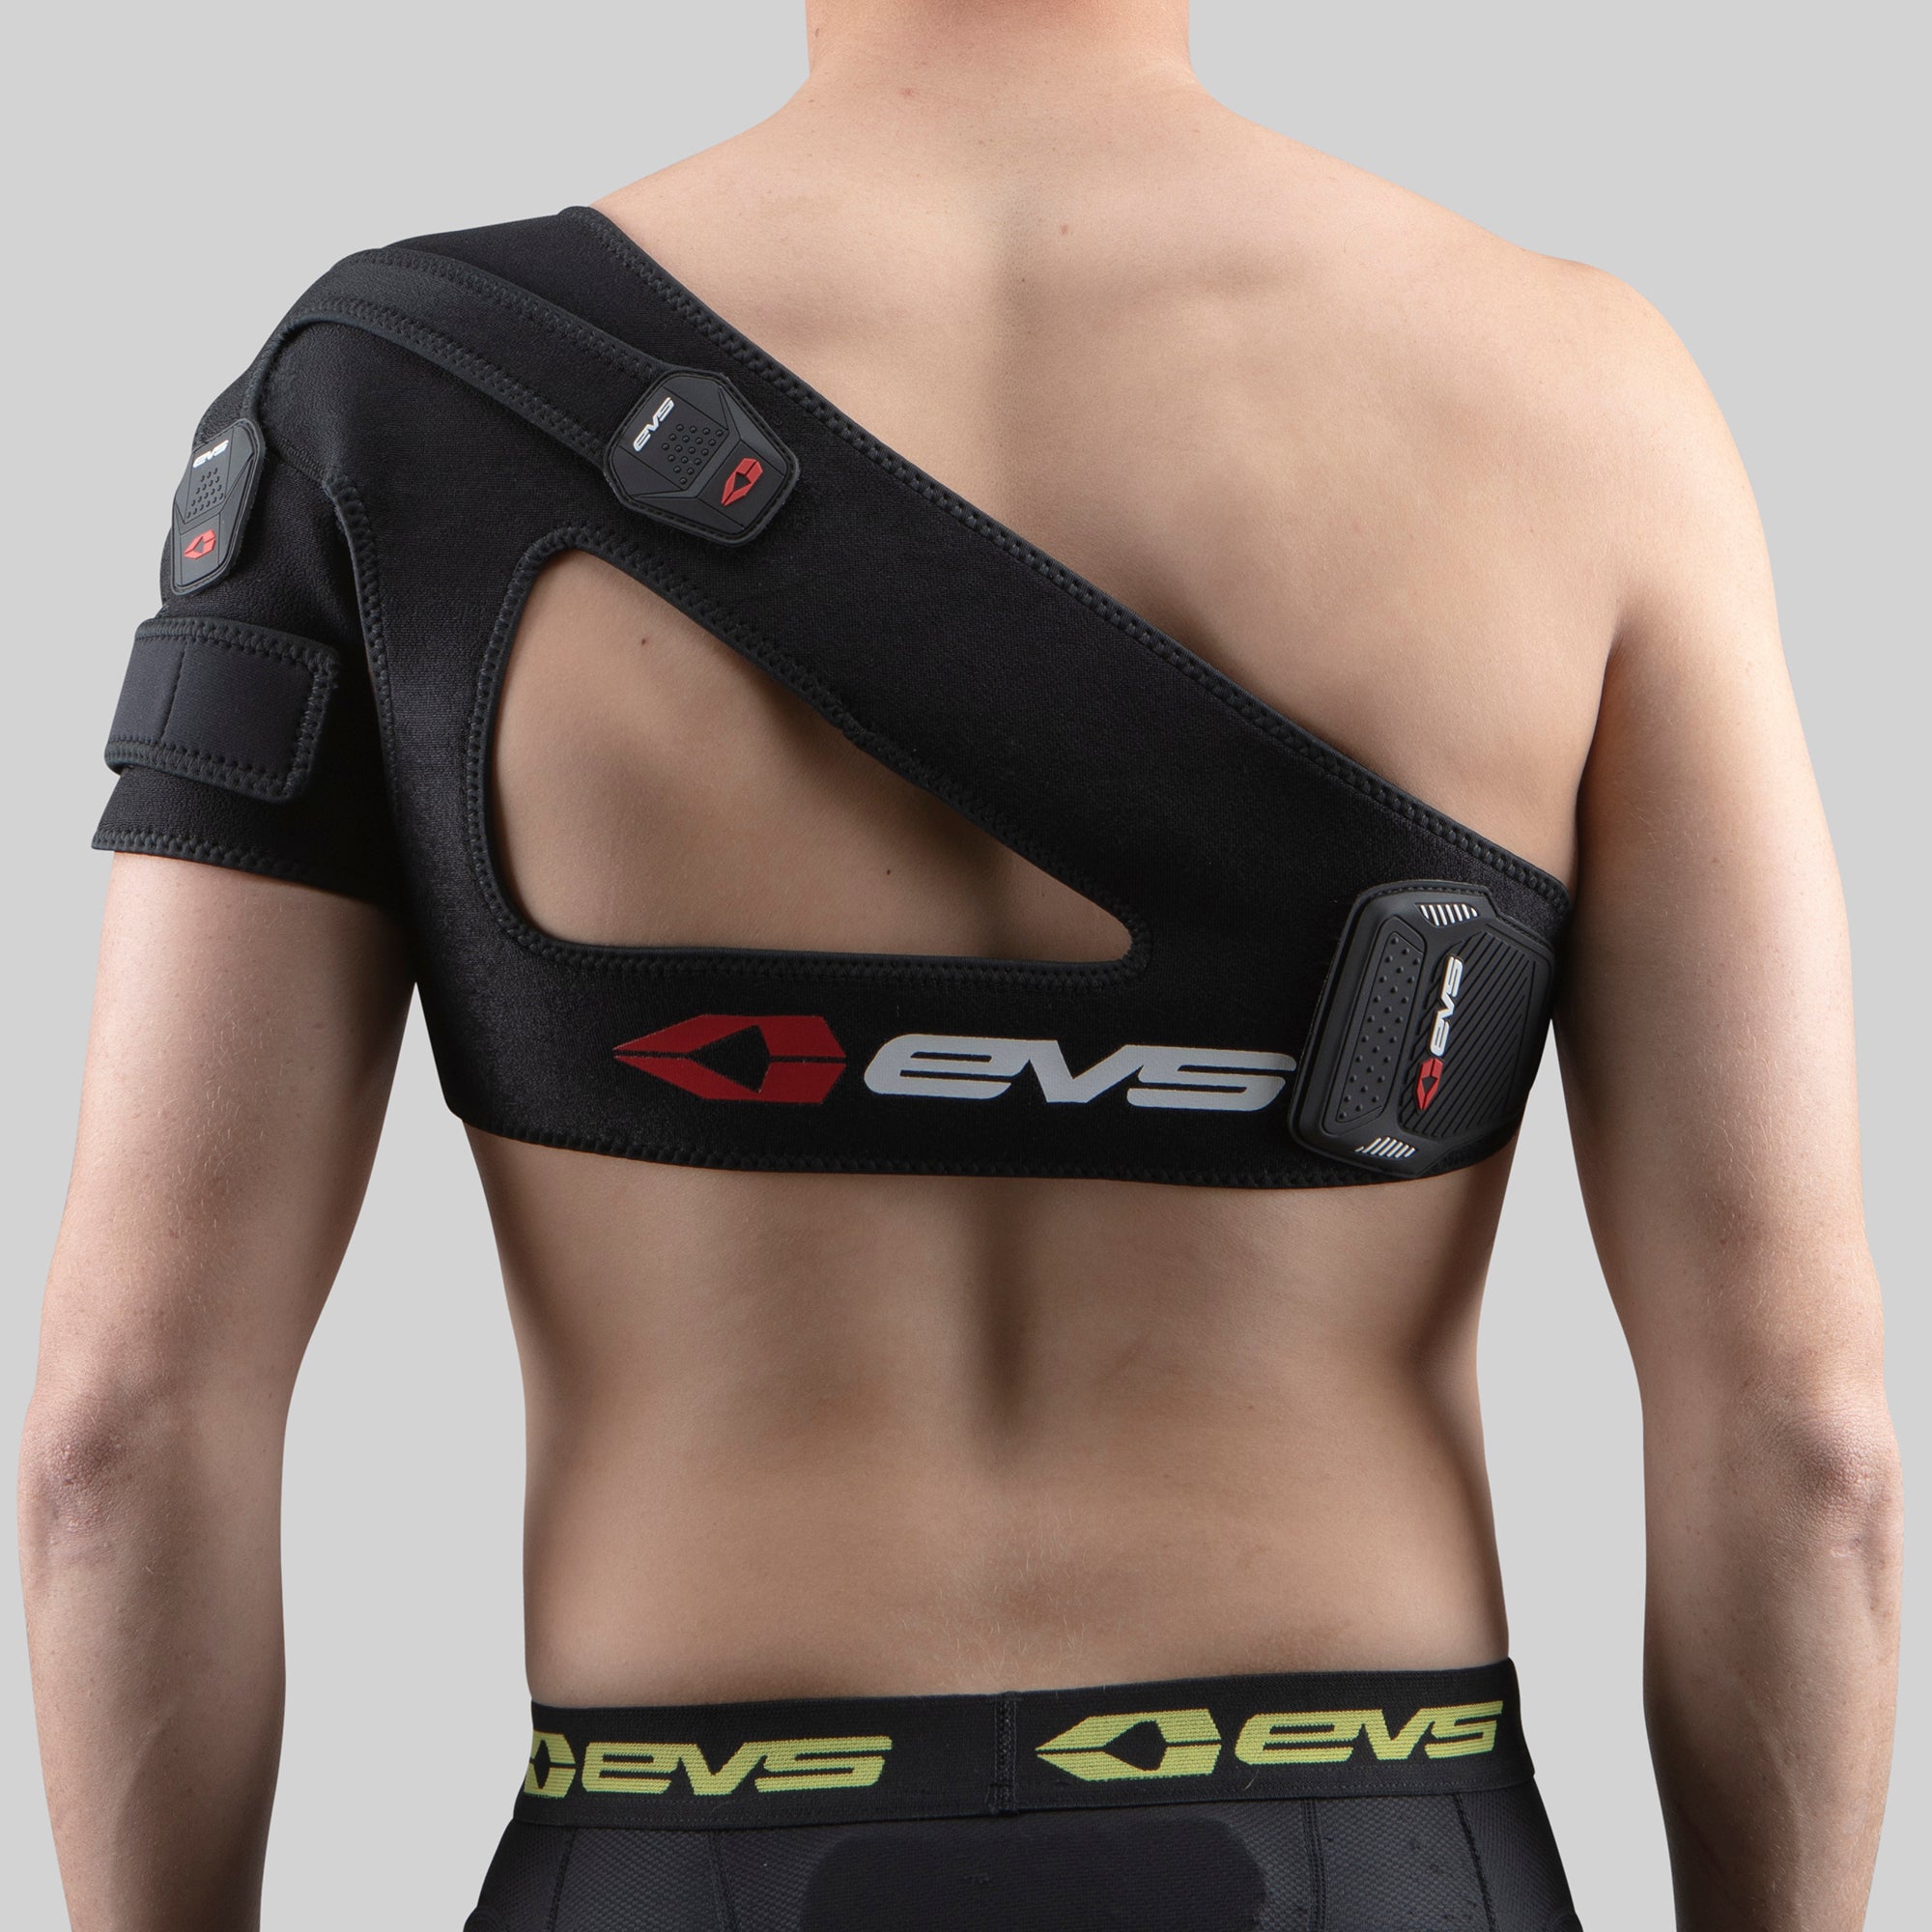 Sports Double Shoulder Brace Support Strap Wrap Belt Band Pad Support- Black